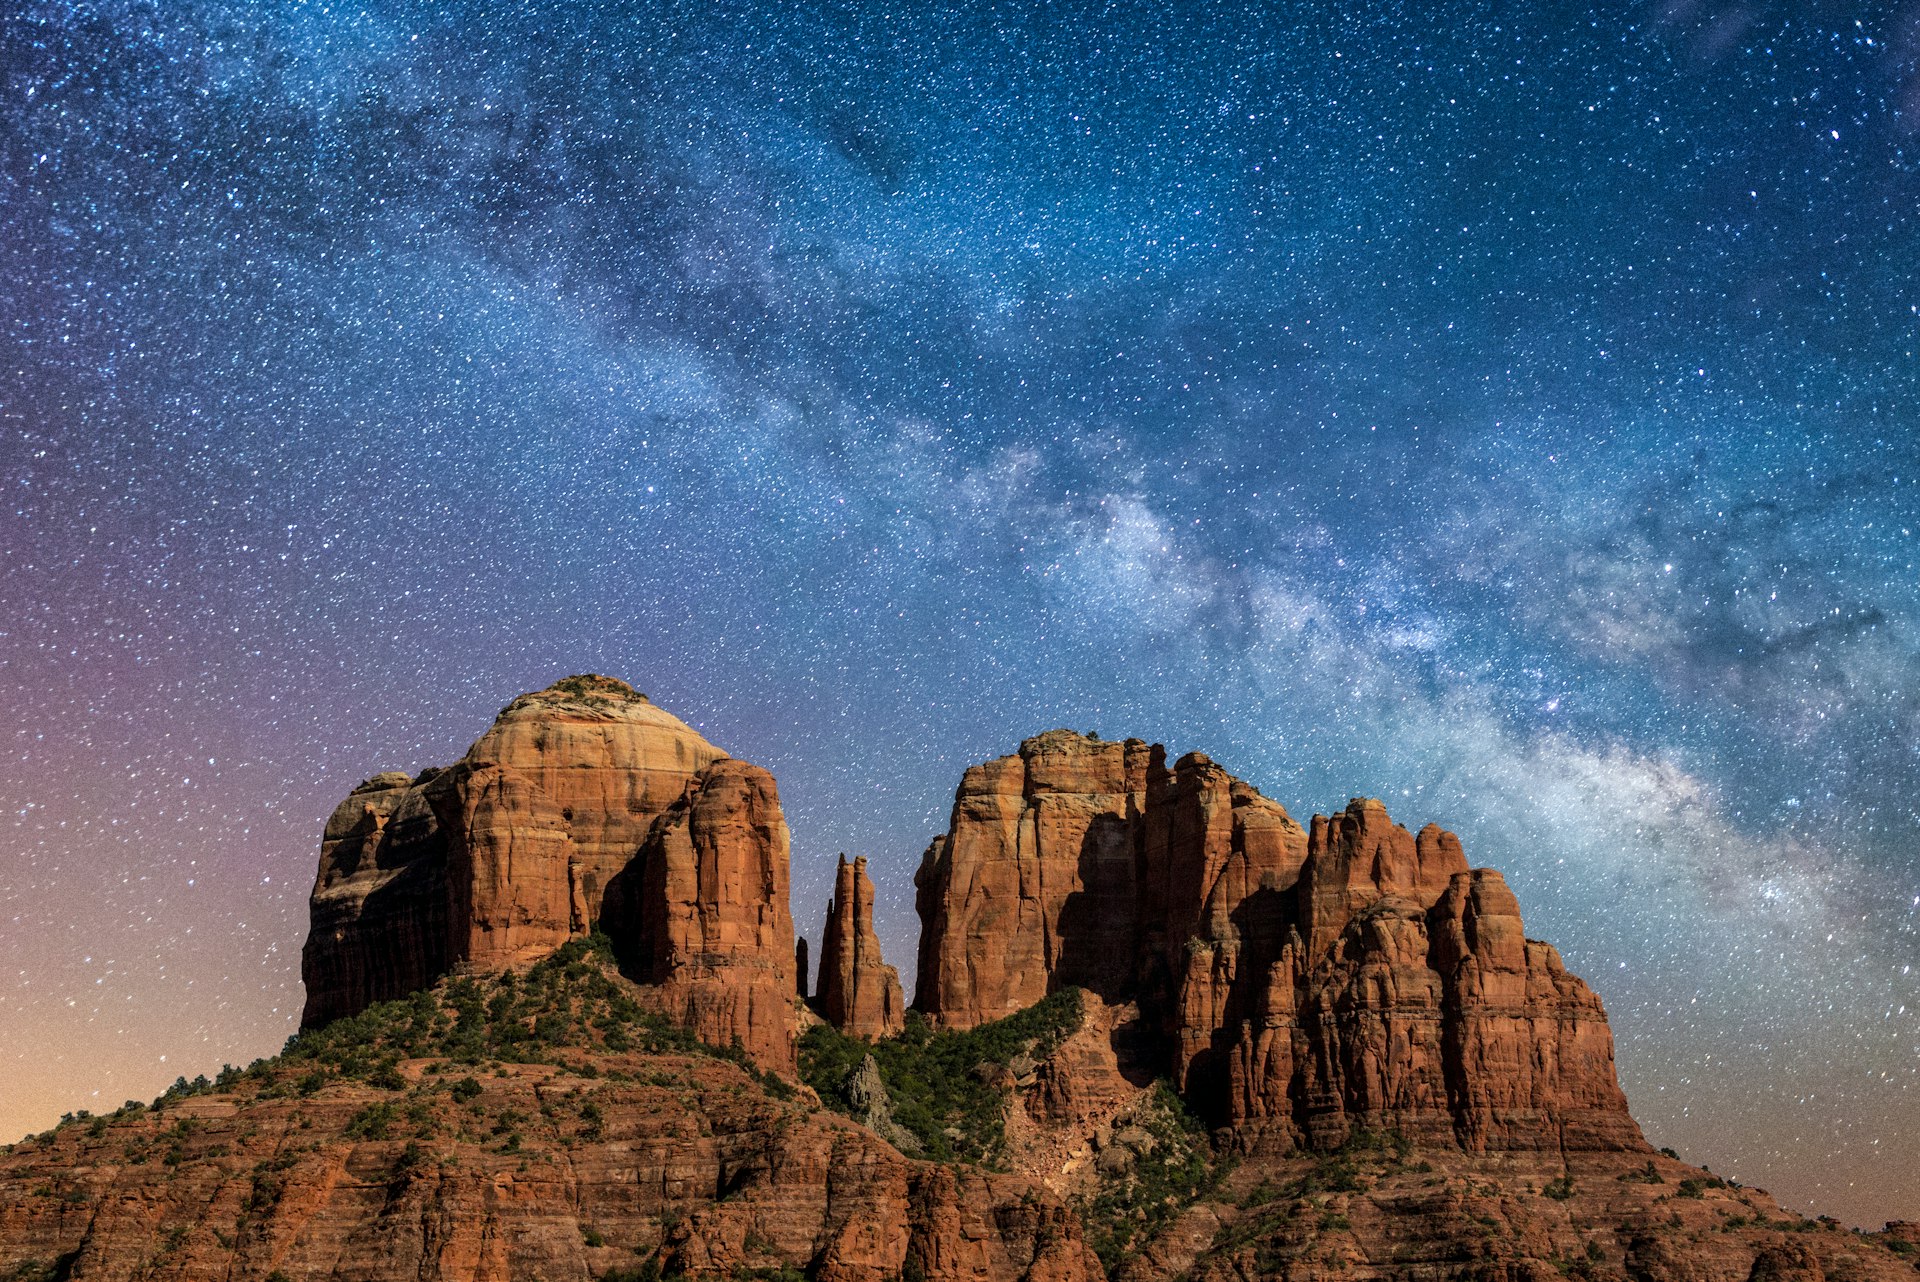 The Milky Way seen over Cathedral Rock in Sedona, Arizona, USA